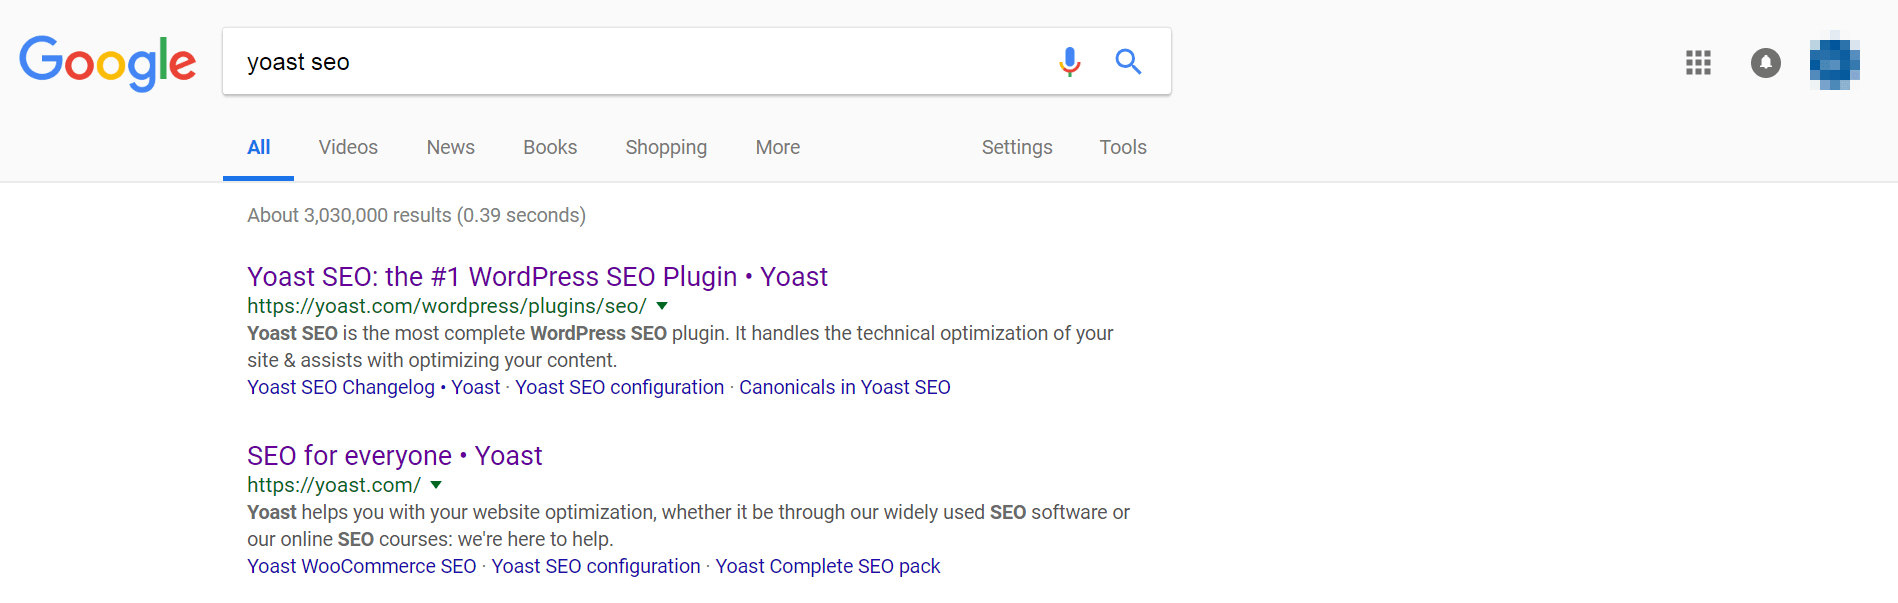 A Google search for Yoast SEO.